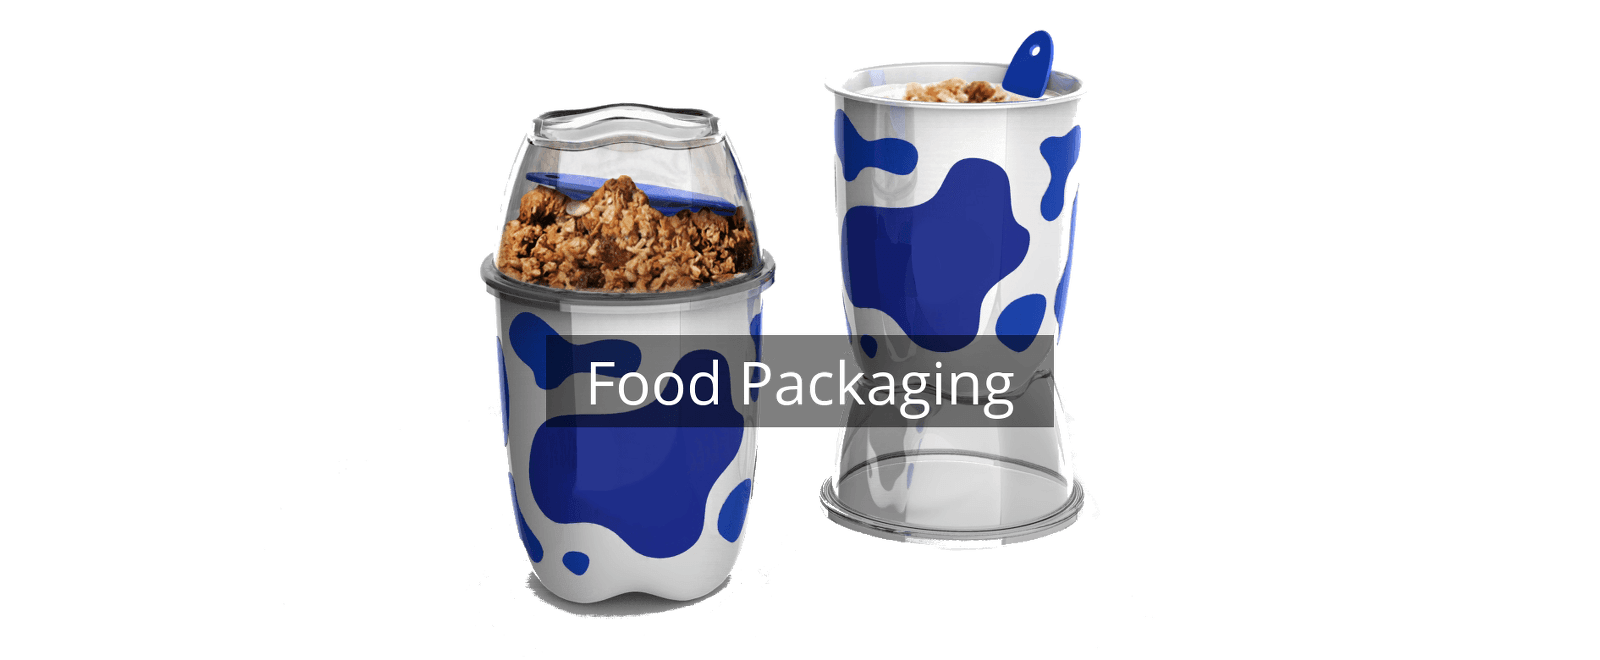 food-packaging-tag-min